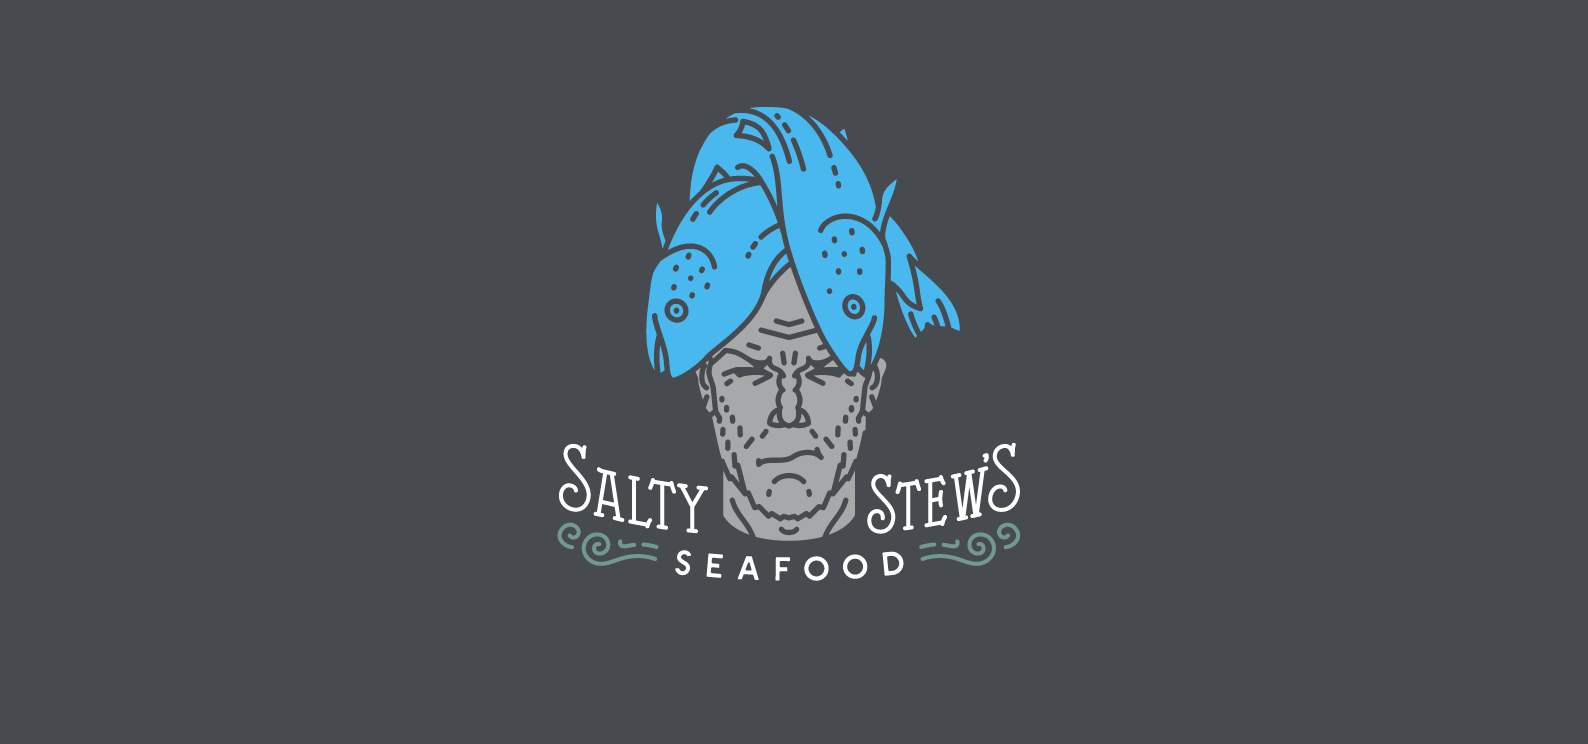 Monoline logo of fisherman with 2 blue fish on his head